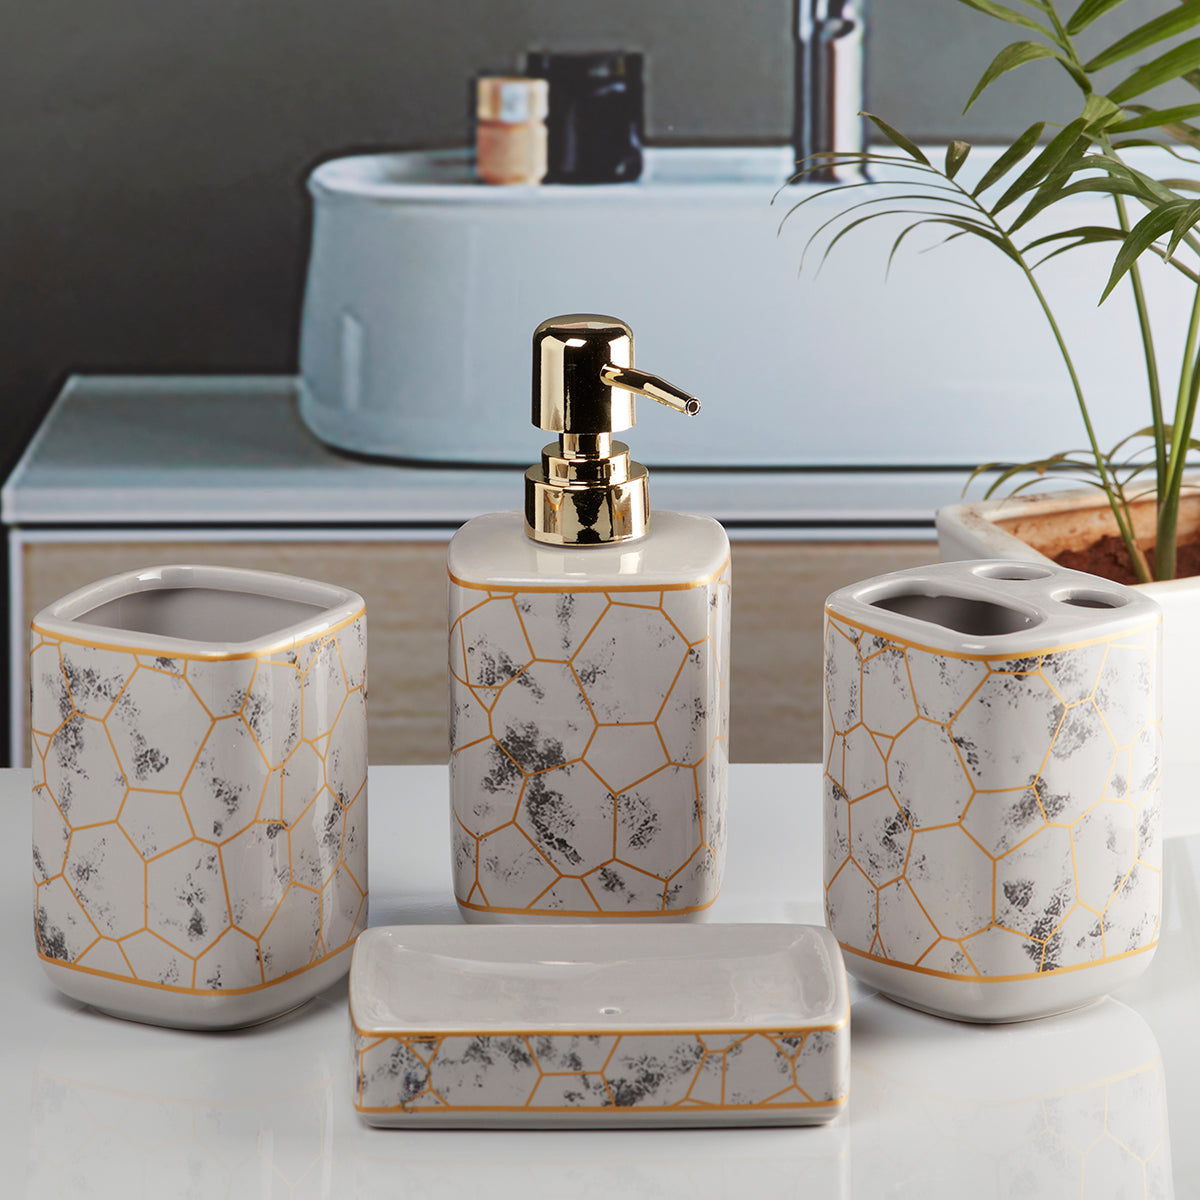 Ceramic Bathroom Accessories Set of 4 Bath Set with Soap Dispenser (9897)